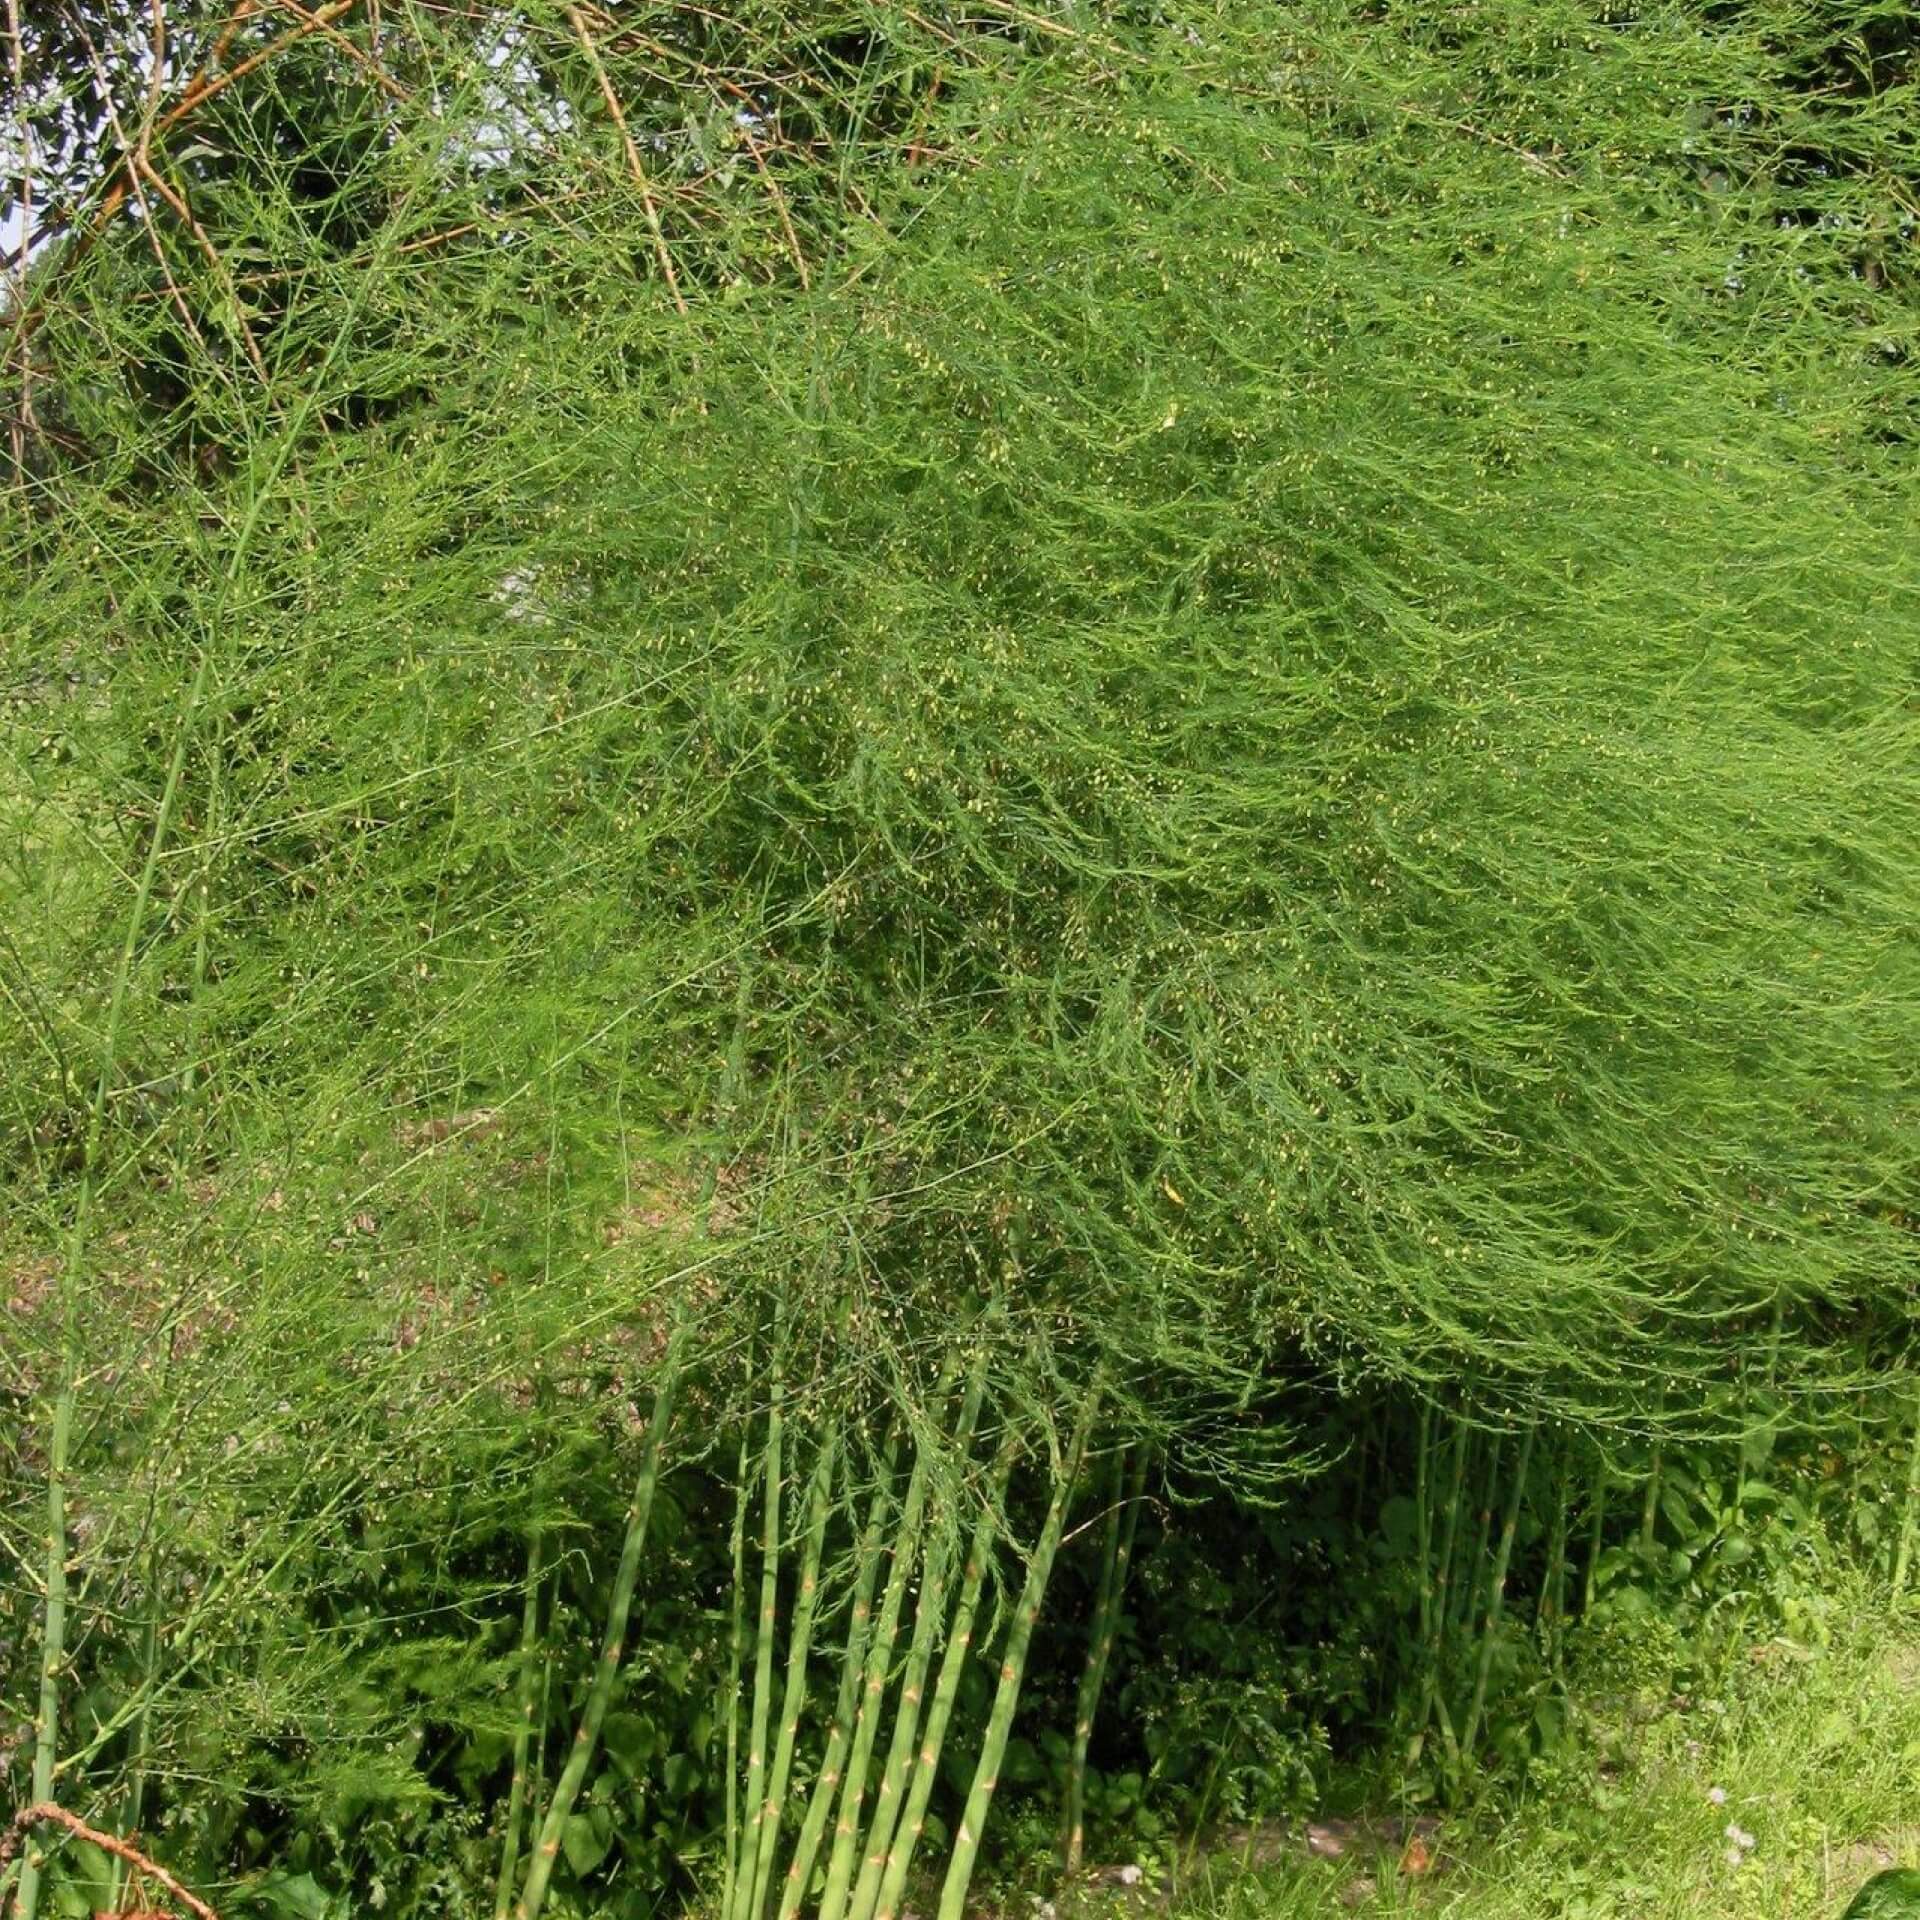 Spargel (Asparagus officinalis)